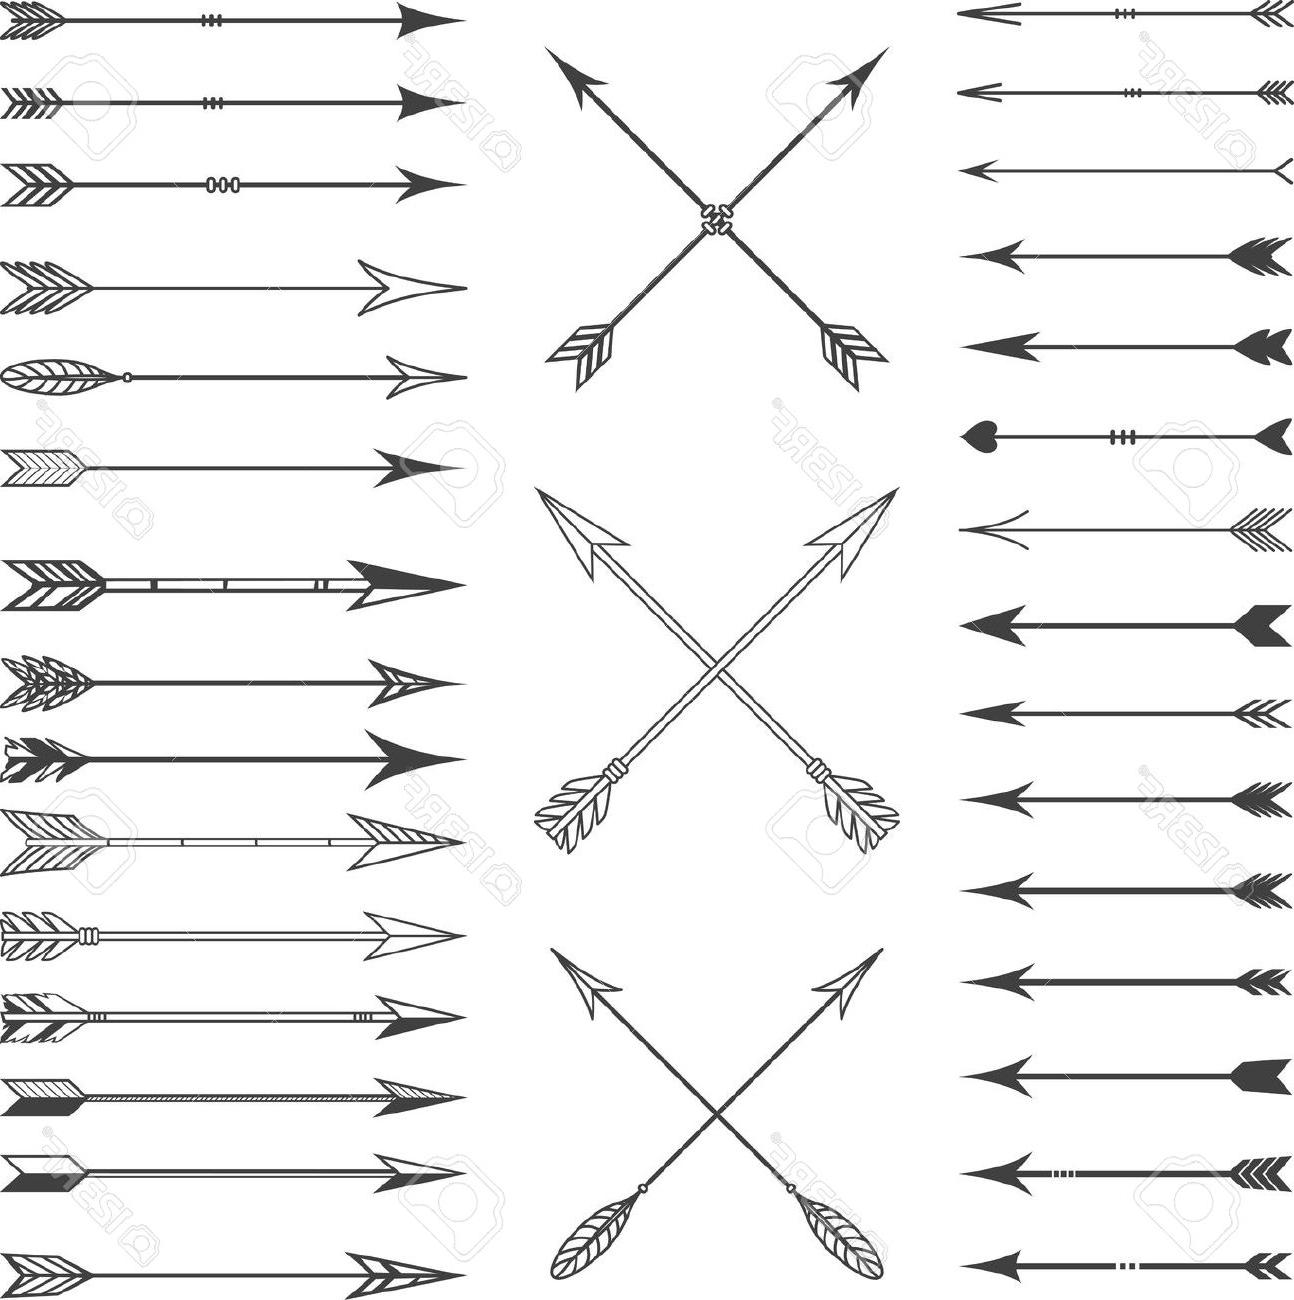 Tribal Arrow Vector at GetDrawings | Free download